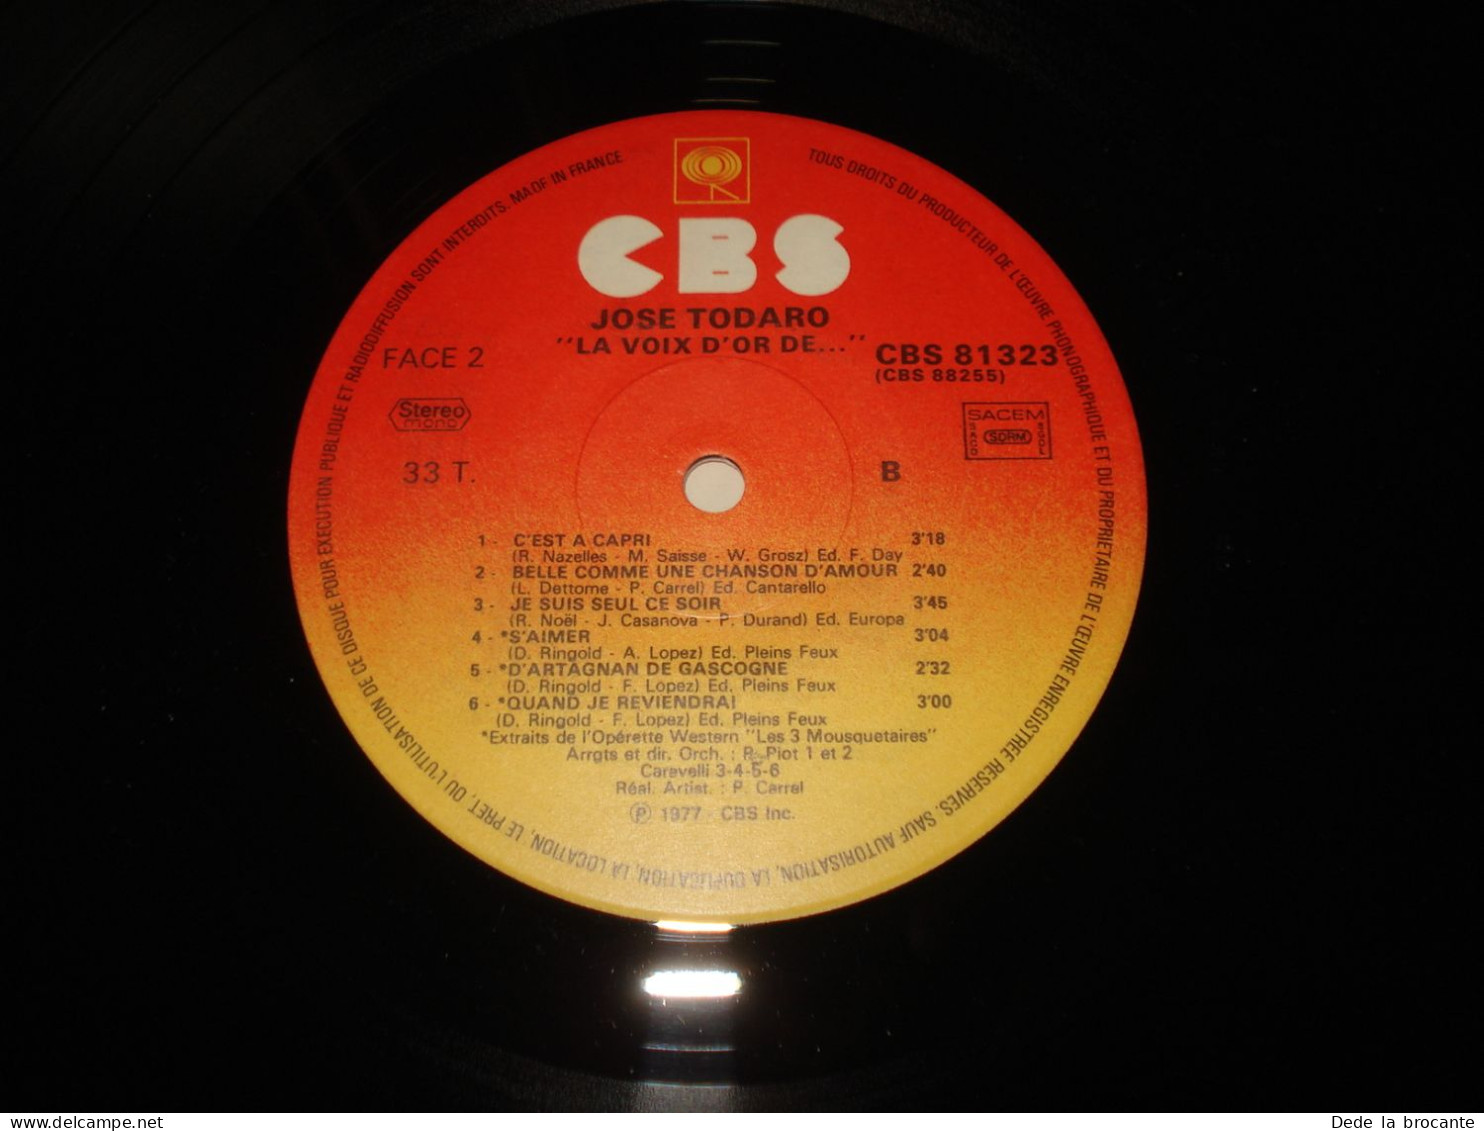 B11 / José Todaro  La Voix D'or - DEDICACE - 2 X LP - CBS 88255 - Fr 1977 - M/EX